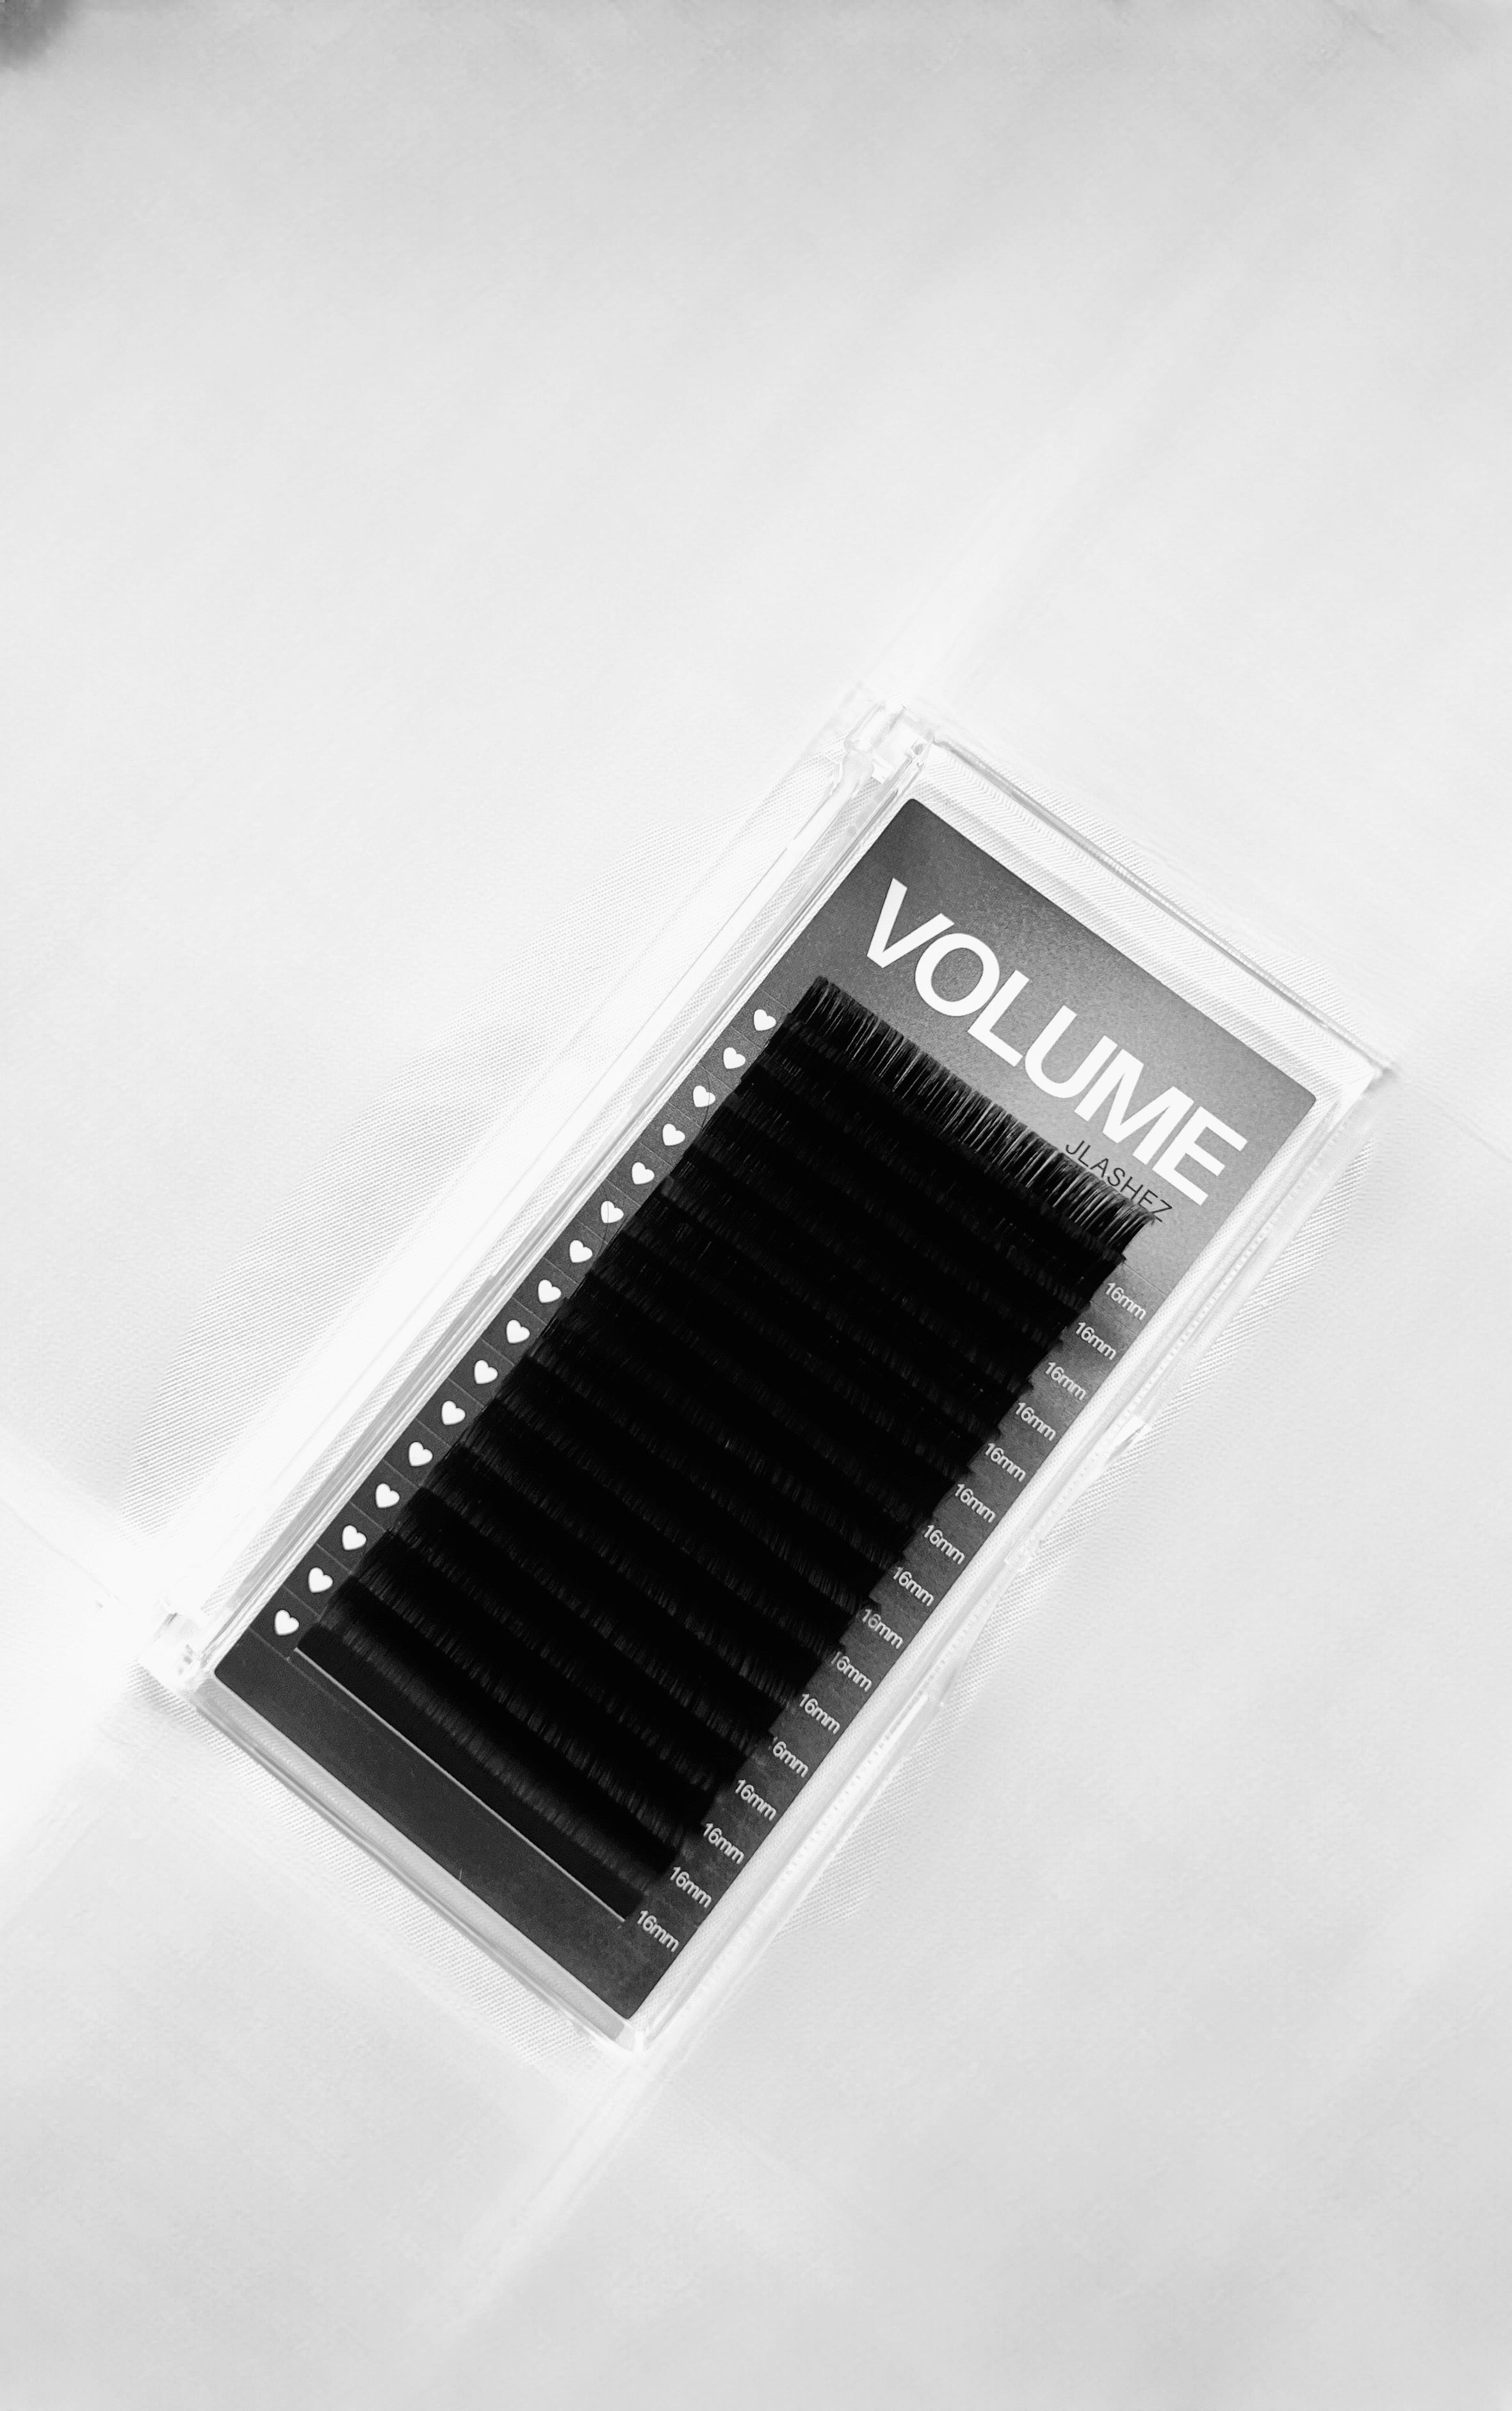 Mink Volume trays